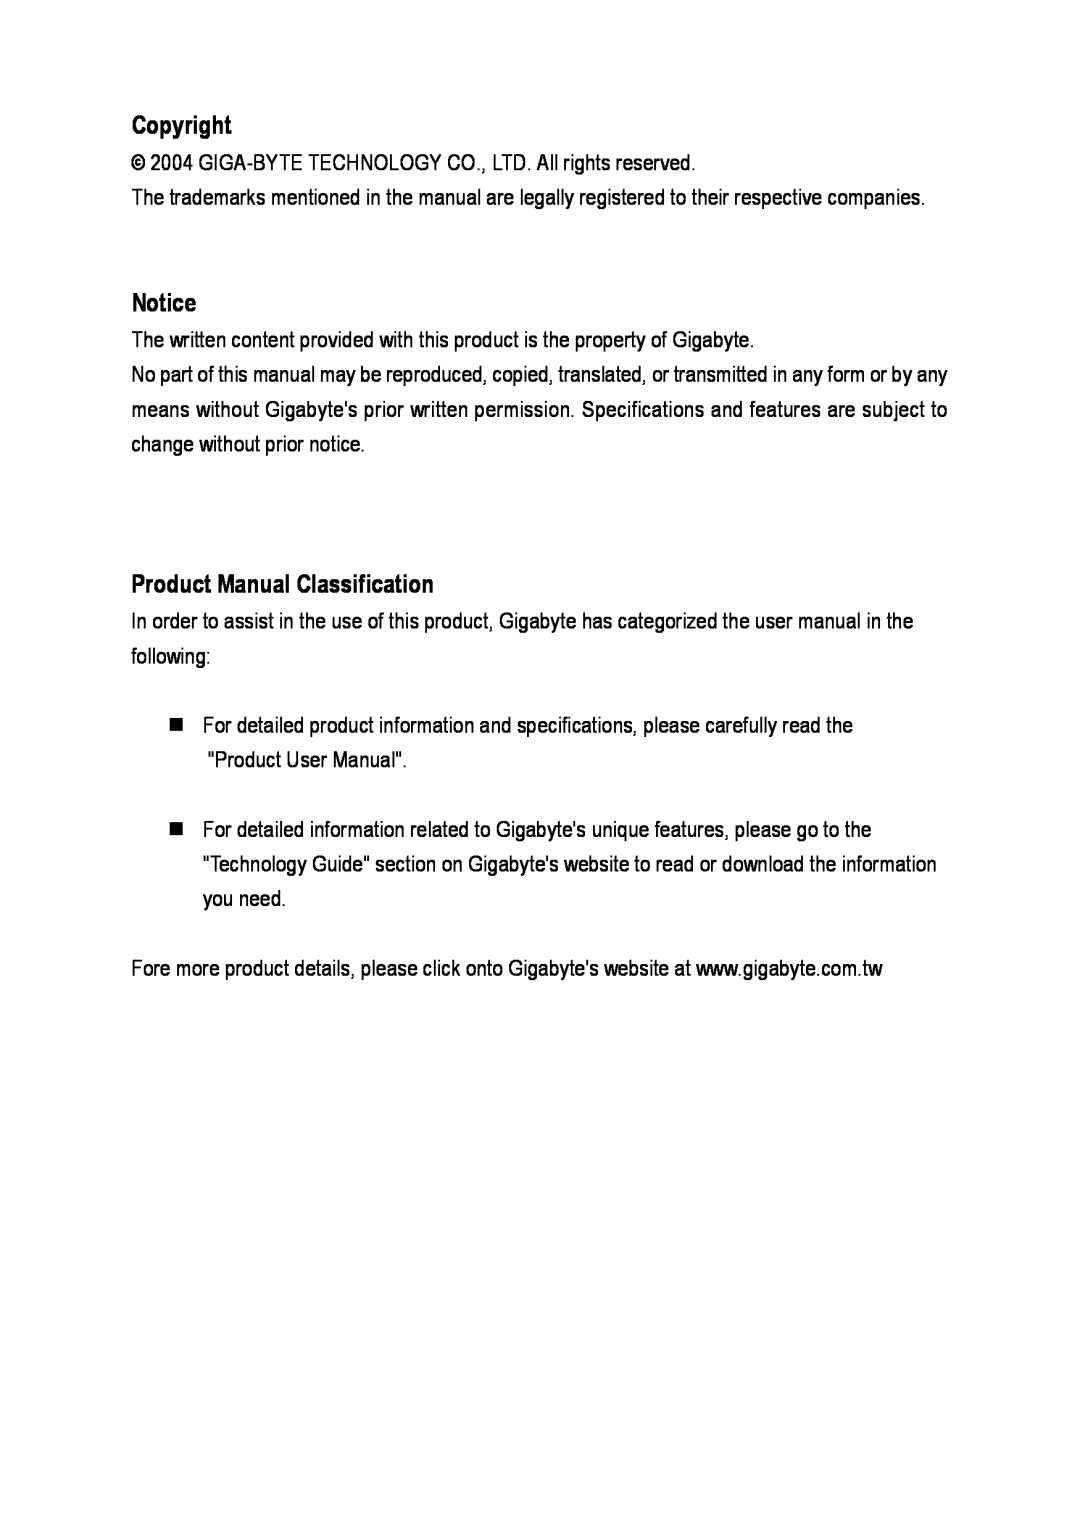 Gigabyte GA-8I865PEM-775 user manual Copyright, Product Manual Classification 